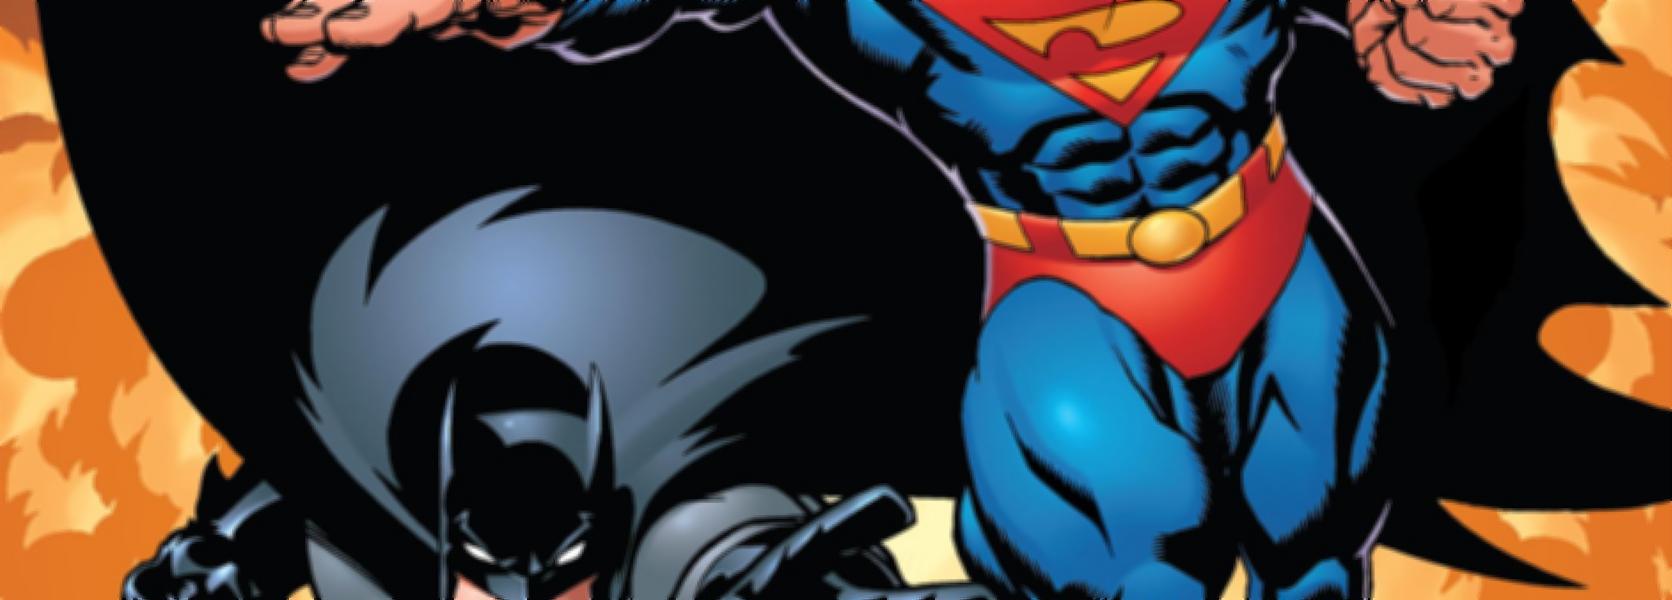 Superman/Batman: Inimigos Públicos, Wiki Dublagem